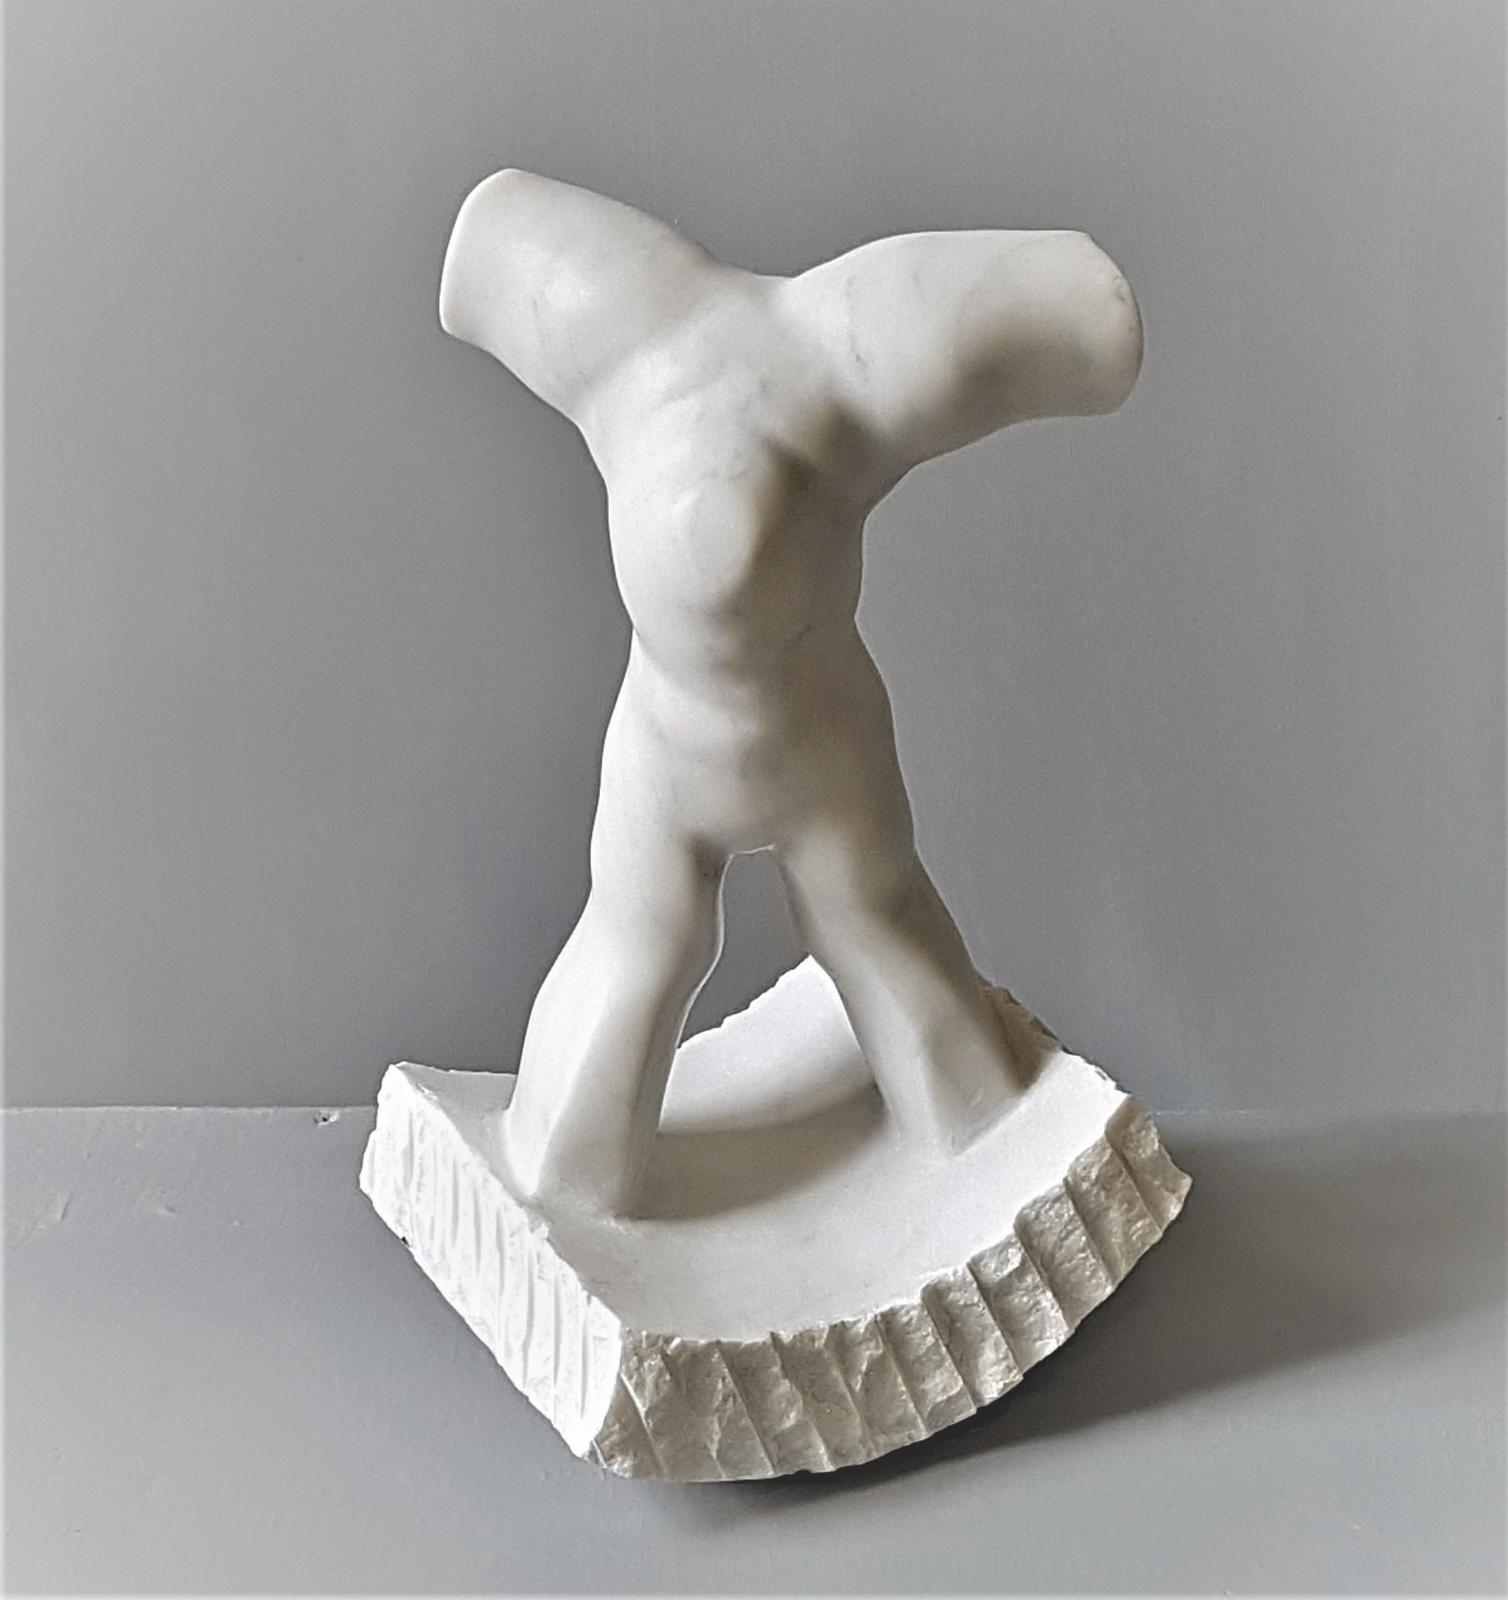 Christoph Traub, Balance, Ansicht I, 2020, Marmor, 33 x 15 x 19 cm, trc023kü